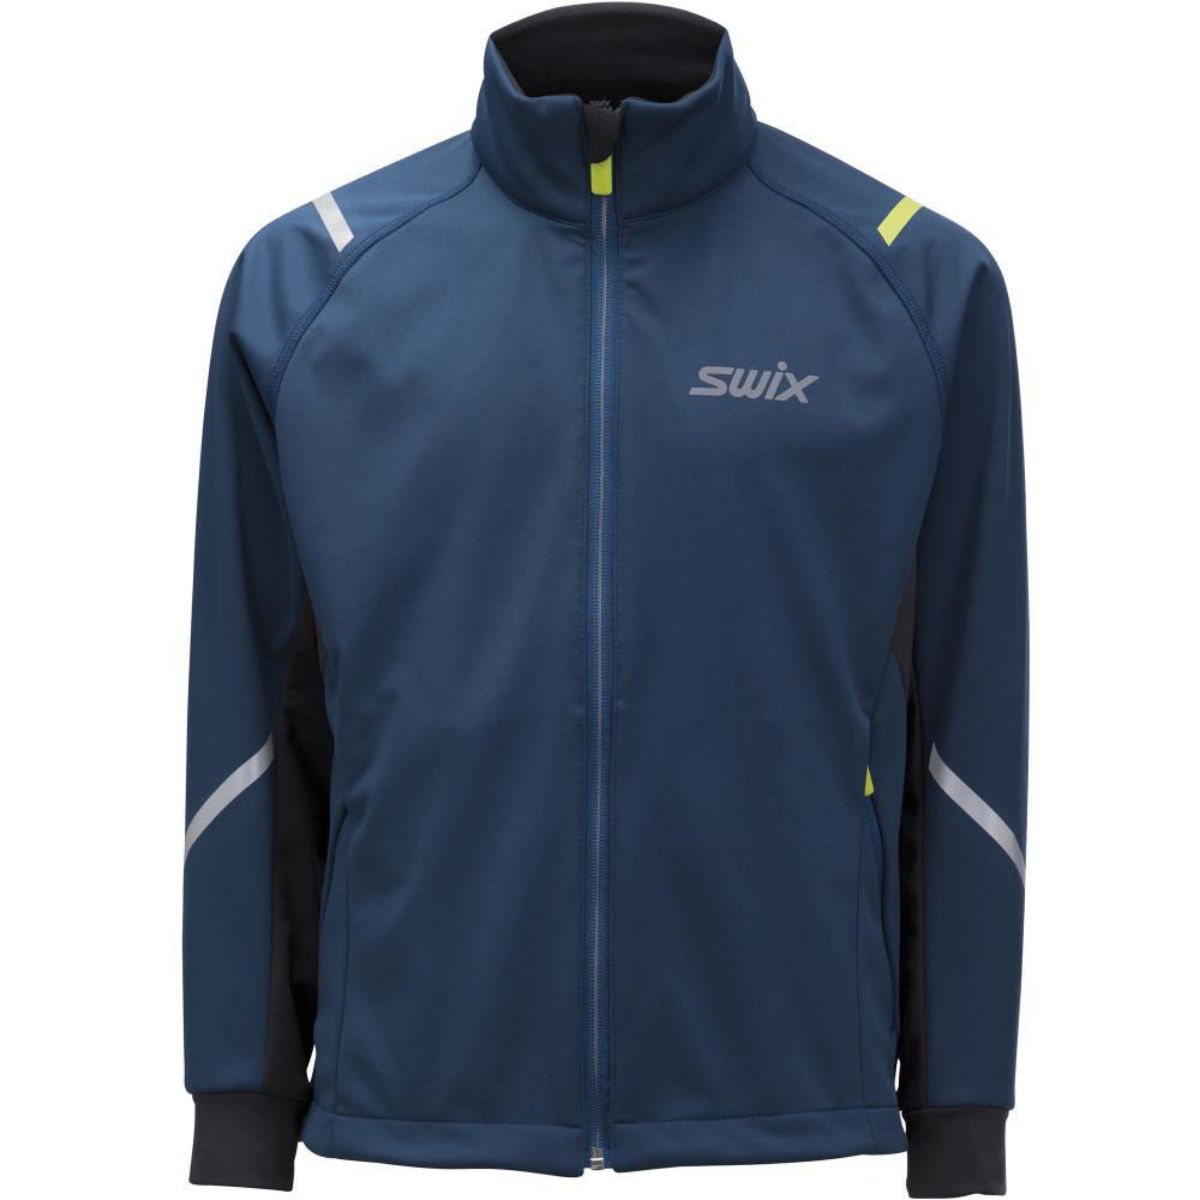 Bilde av Swix  Cross jacket Junior straight 76208 Majolica blue